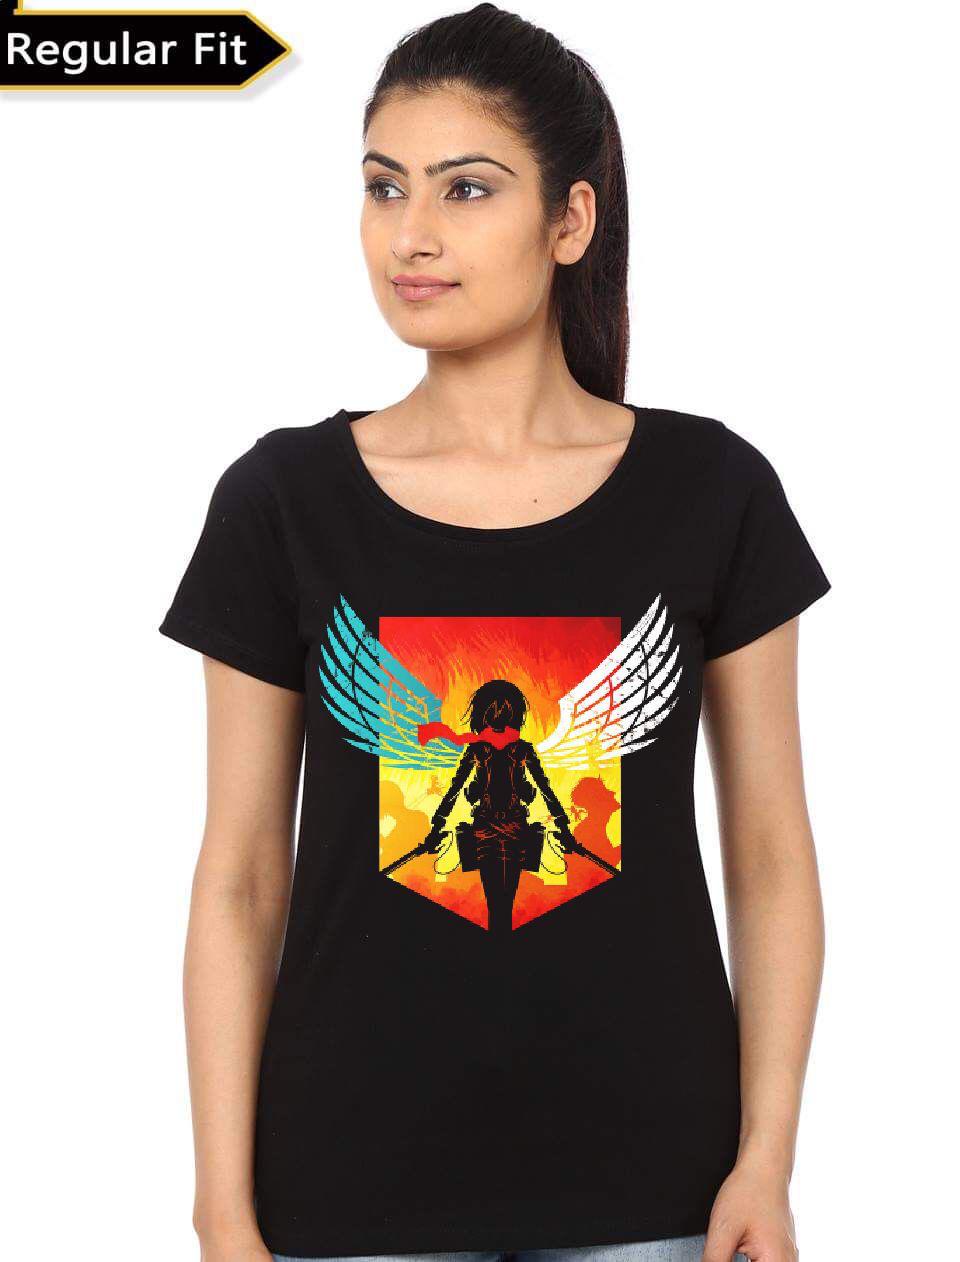 Attack on Titans girl's Black T-Shirt - Supreme Shirts